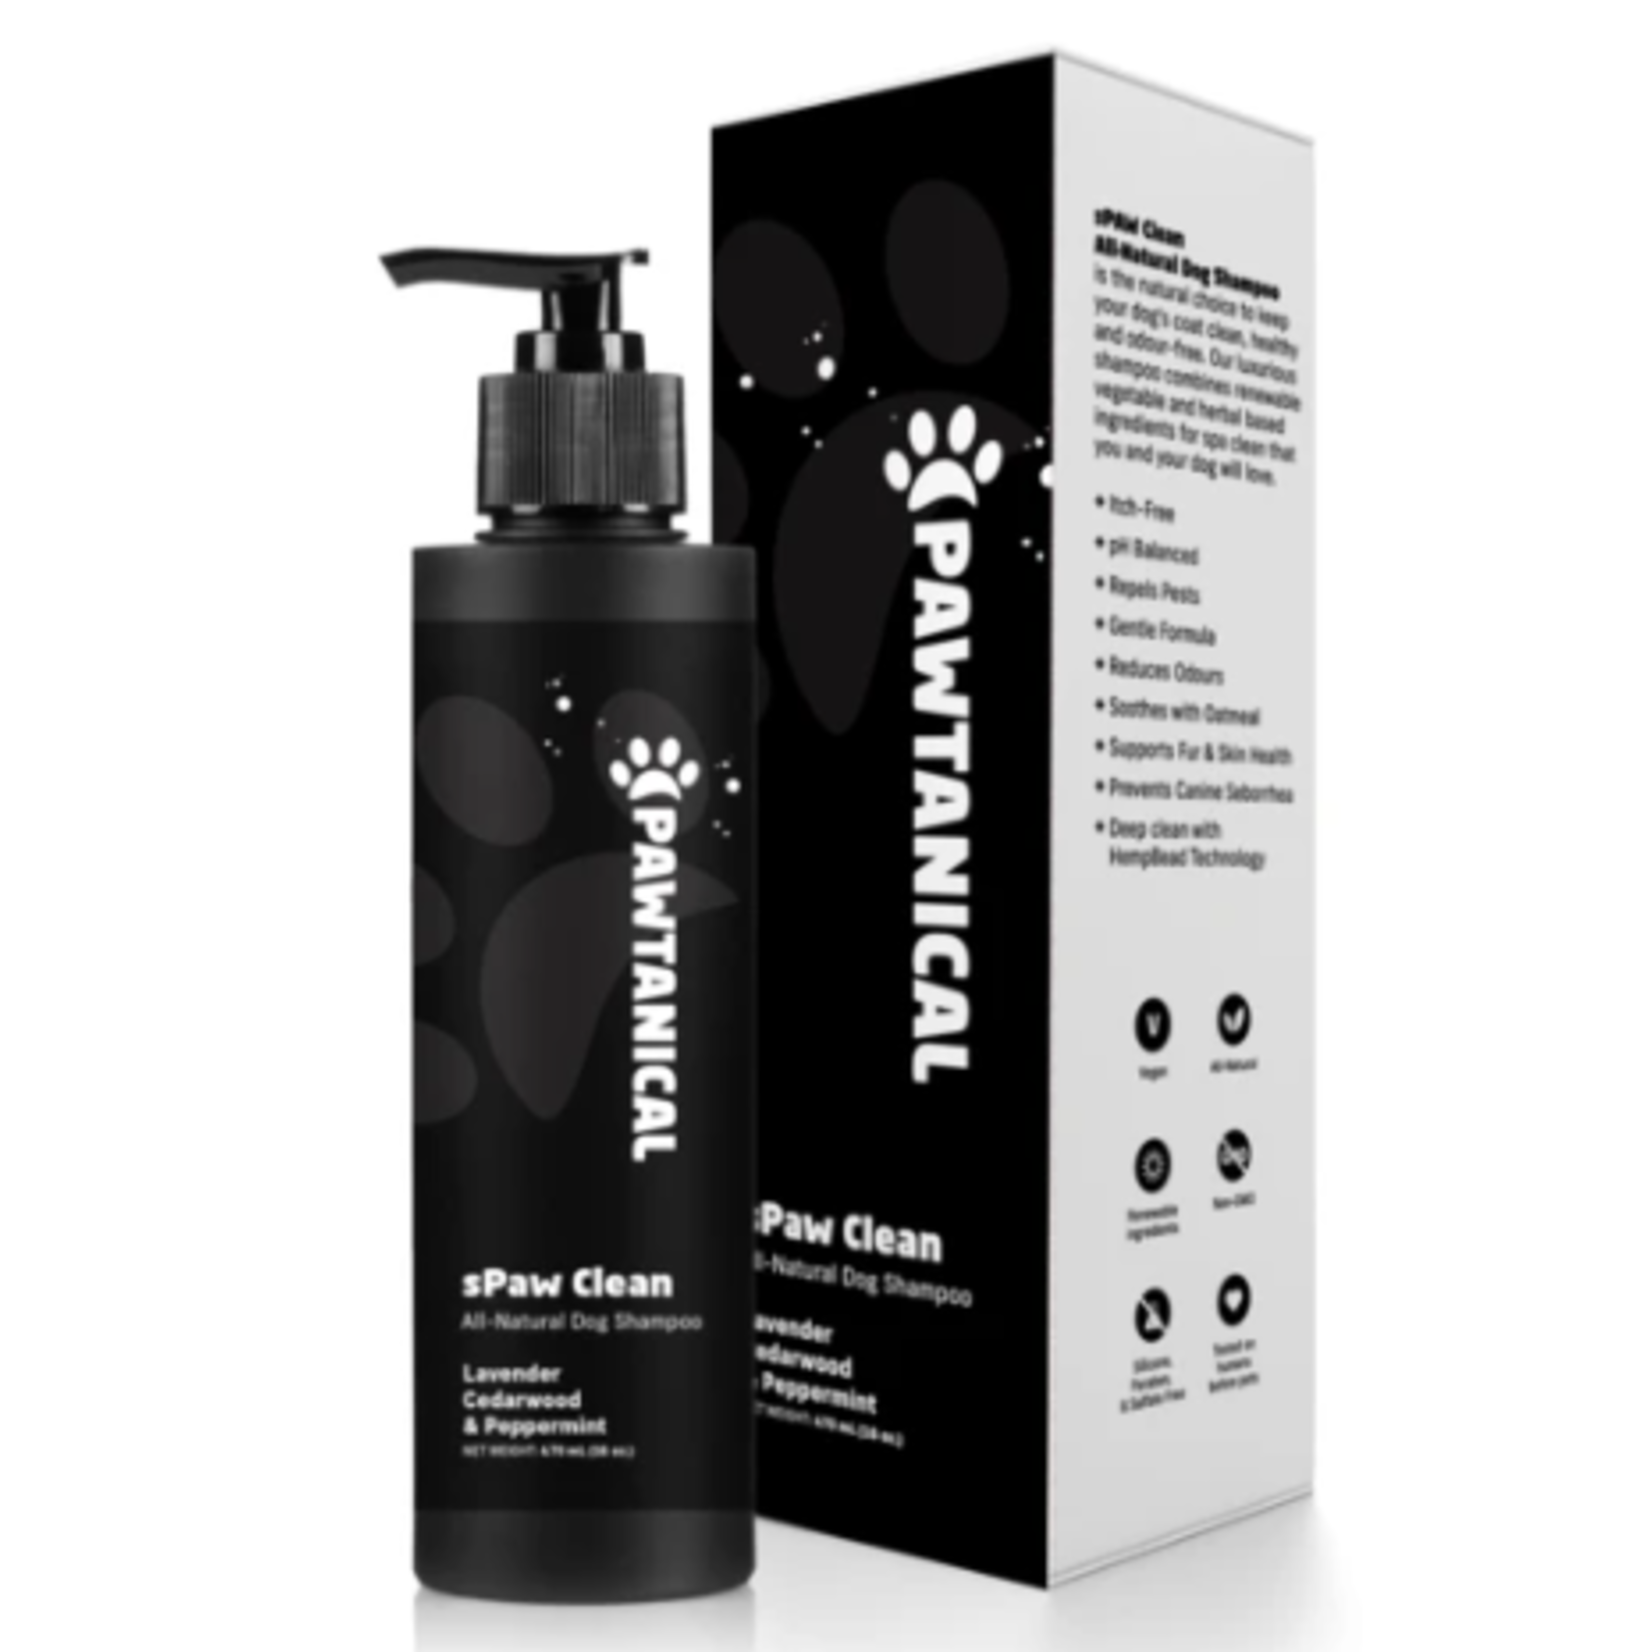 Pawtanical sPaw Clean · All-Natural Dog Shampoo